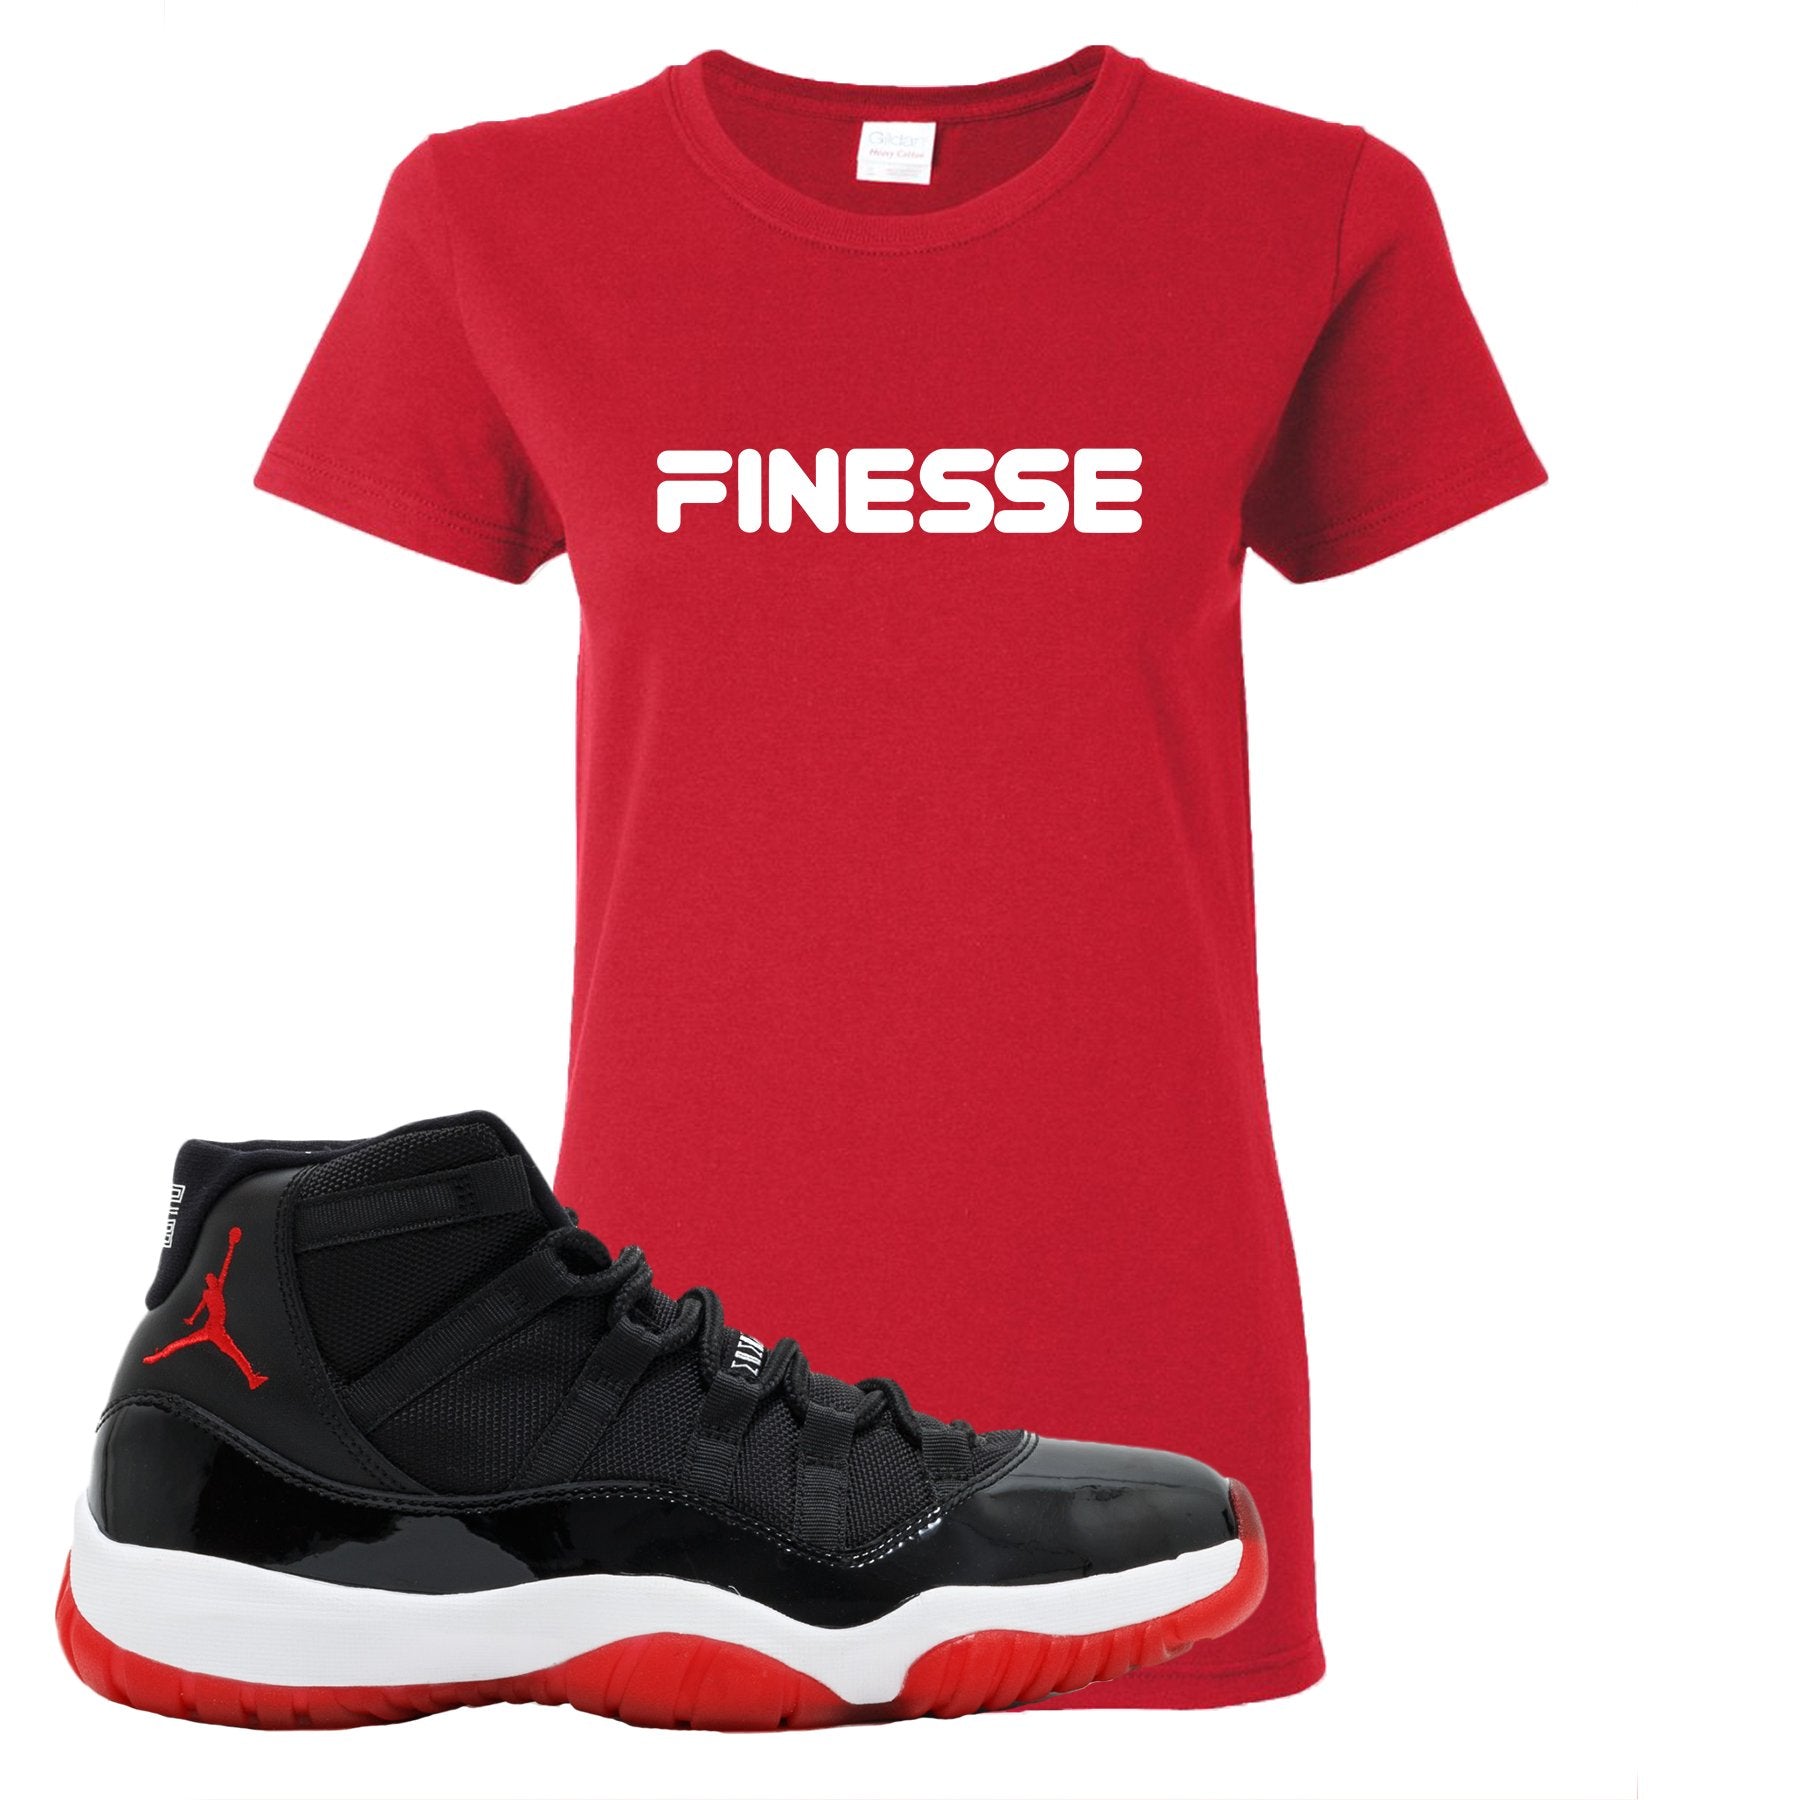 Jordan 11 Bred Finesse Red Sneaker Hook Up Women's T-Shirt